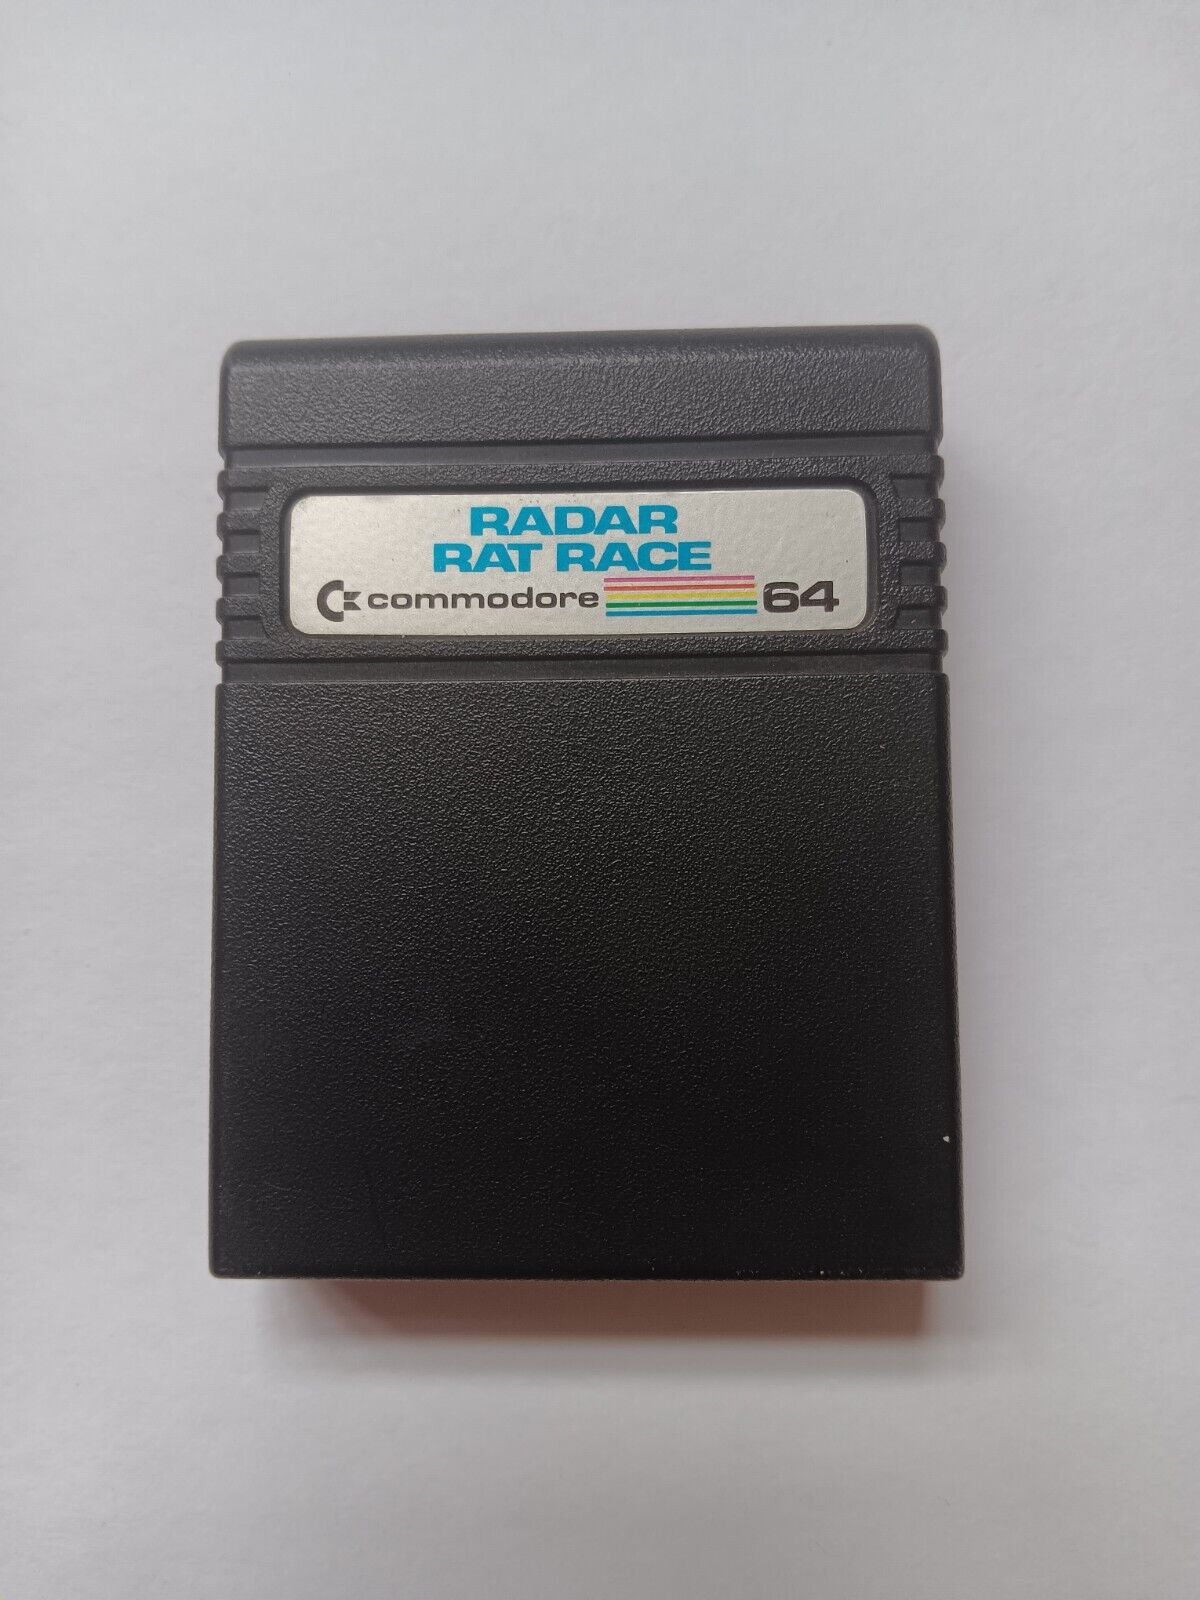 VTG Commodore 64 Radar Rat Race Computer Game Cartridge Tested/Works